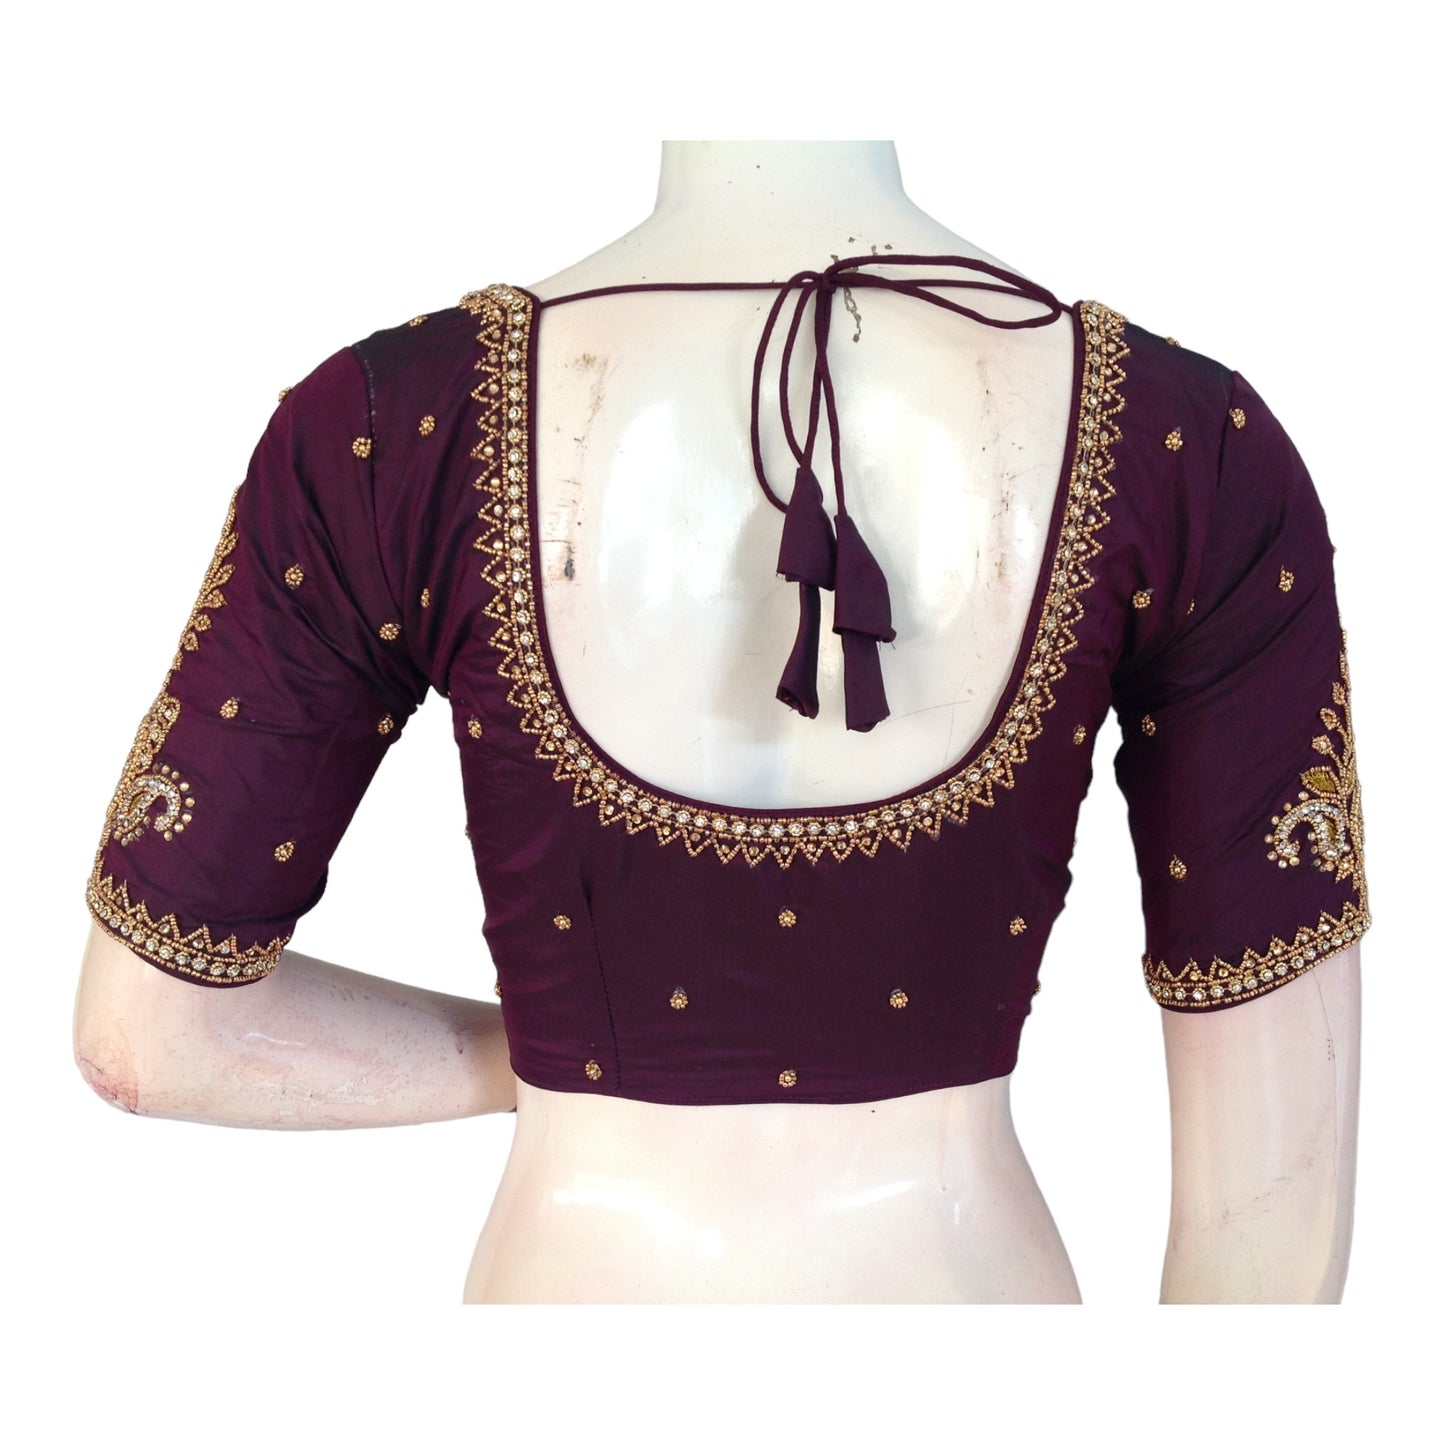 Regal Purple Silk Blouse with Exquisite Aari Handwork for Weddings 